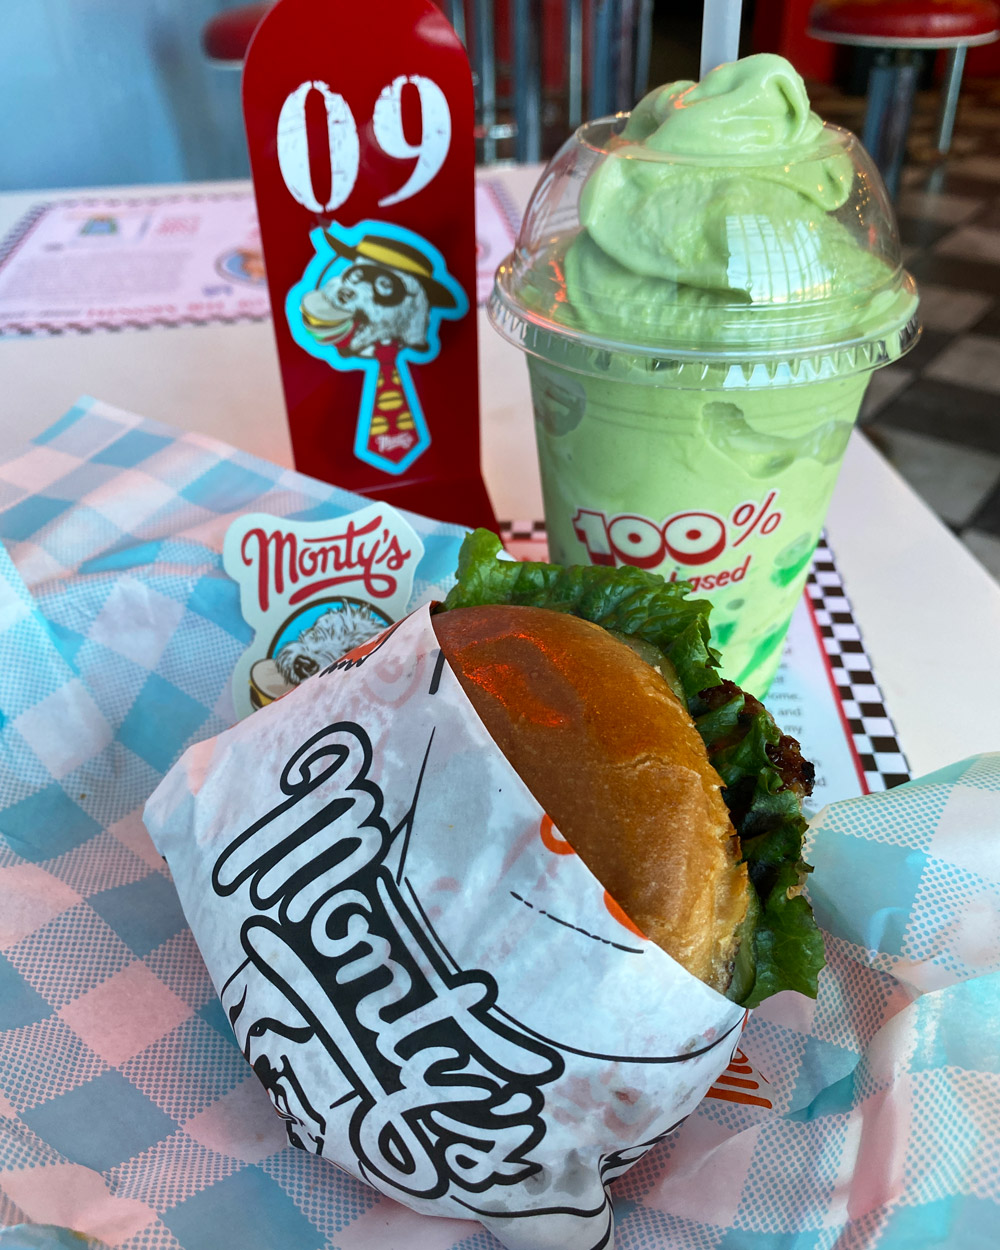 Monty's Good Burger and matcha shake